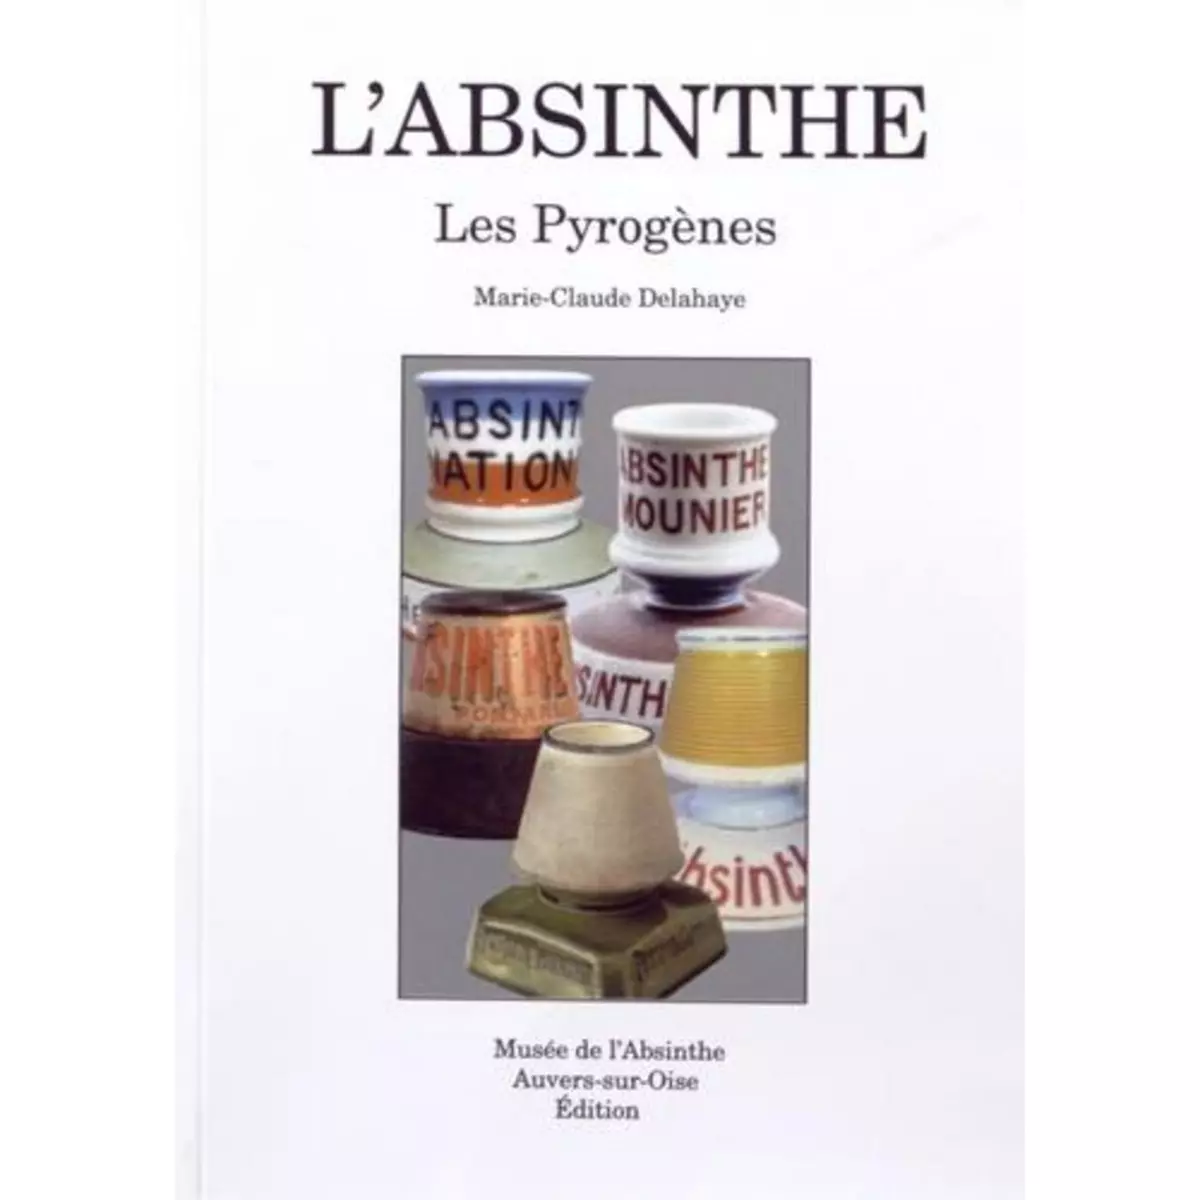  L'ABSINTHE. LES PYROGENES, Delahaye Marie-Claude